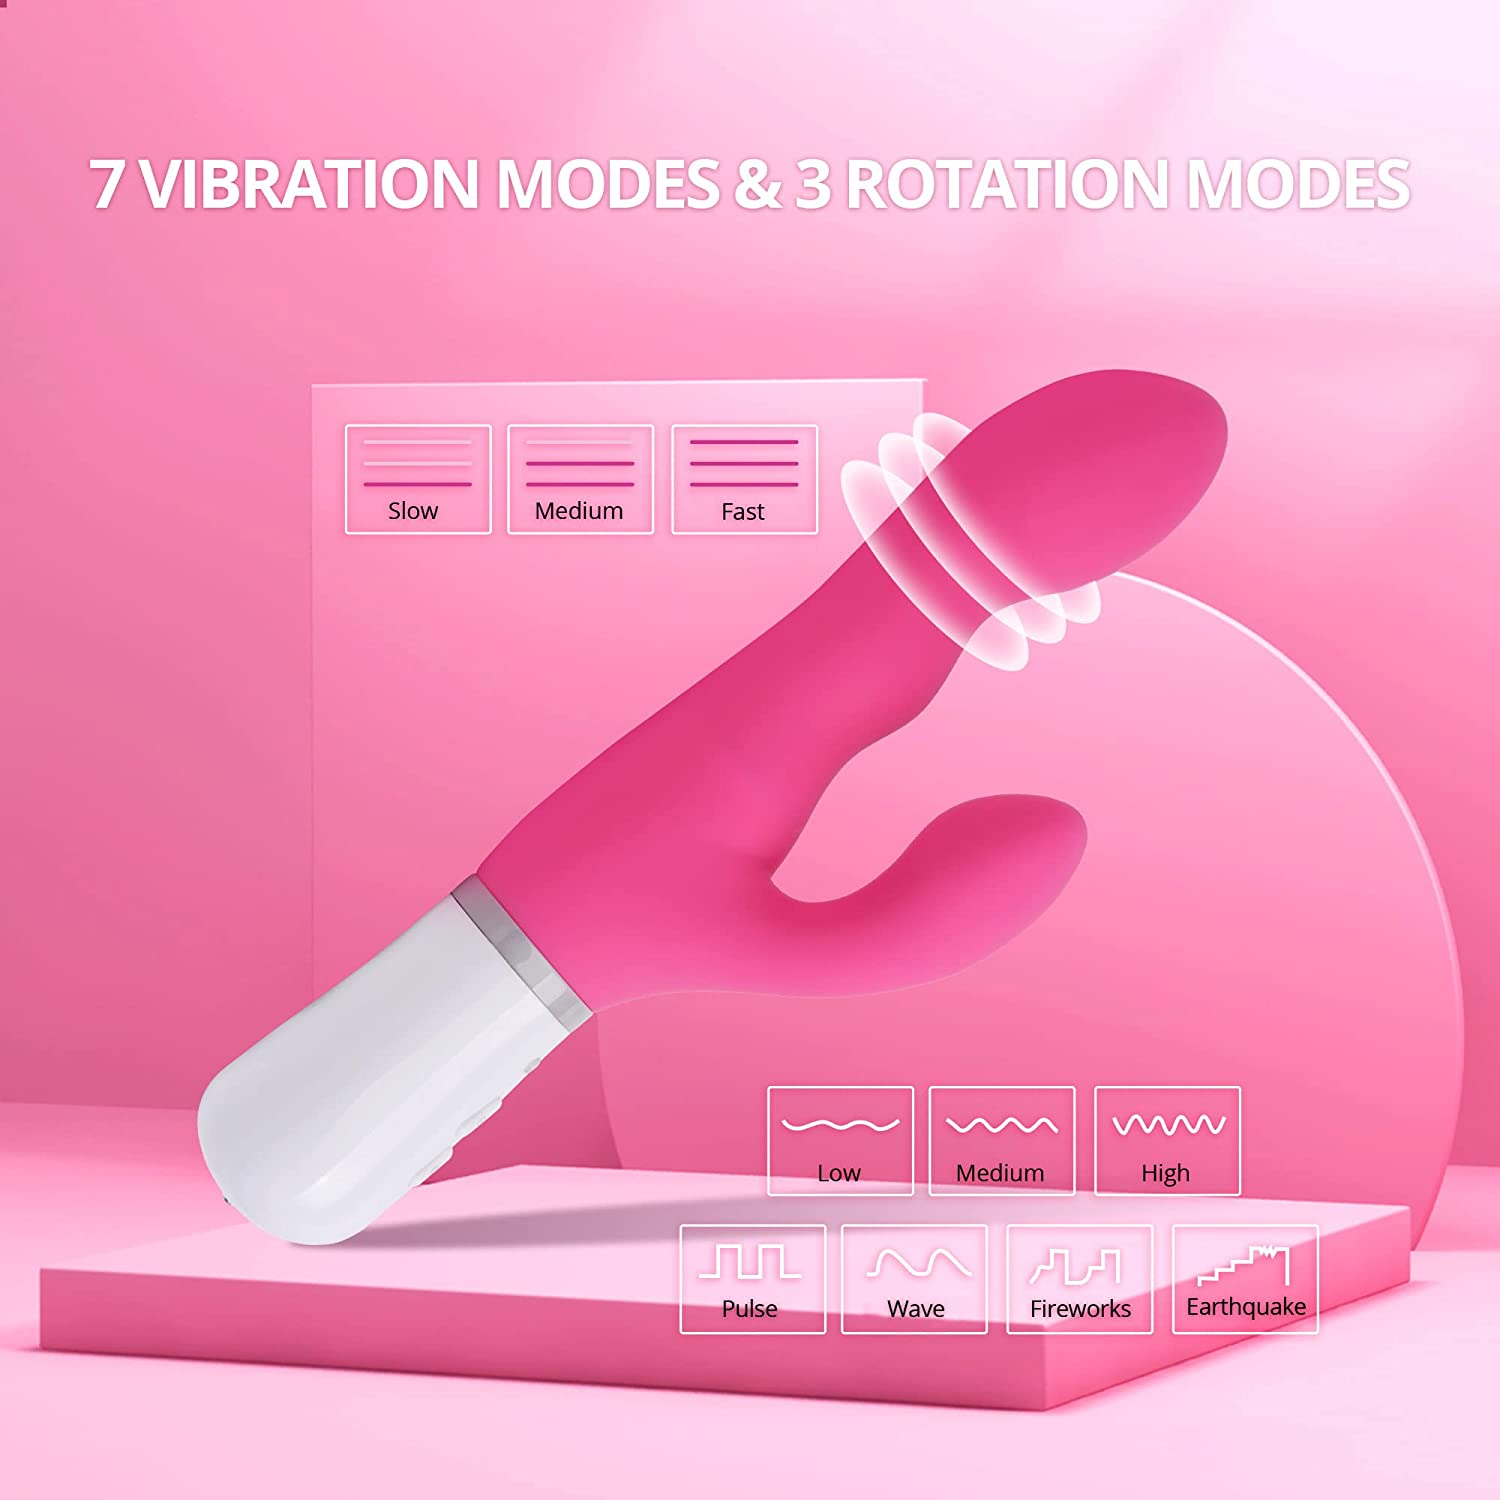 Lovense Nora Bluetooth Rabbit Vibrator - Pink - Thorn & Feather